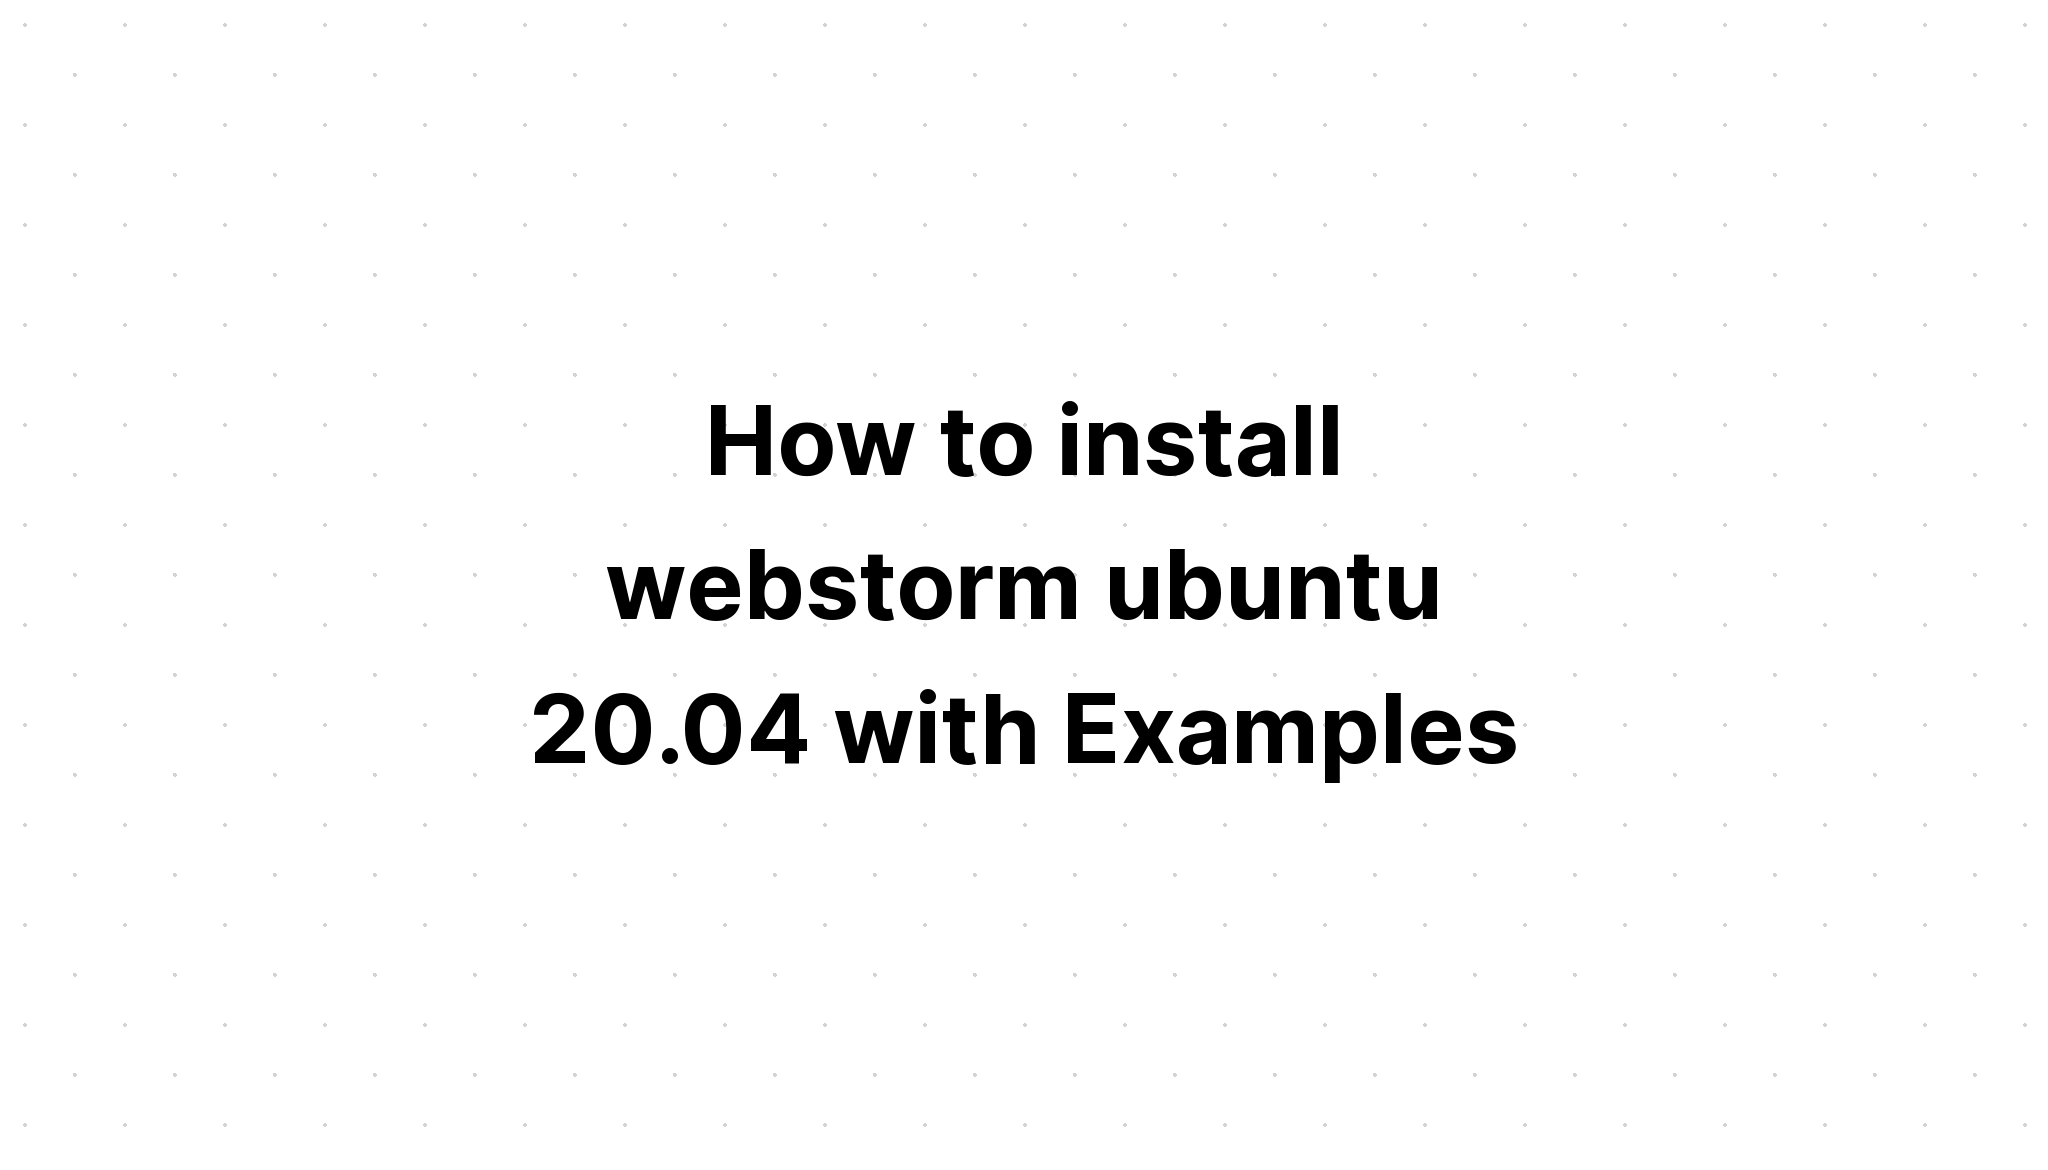 Cara menginstal webstorm ubuntu 20. 04 dengan Contoh